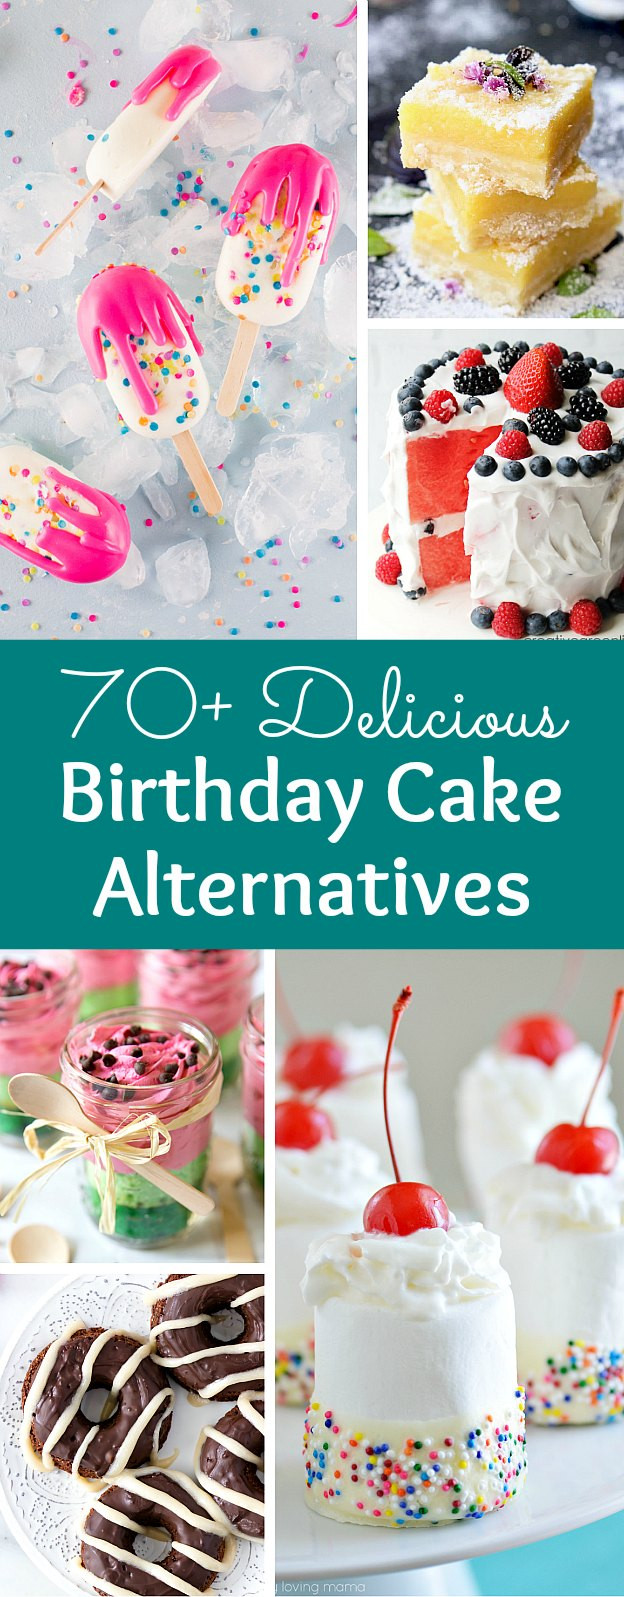 Healthy Alternative To Birthday Cake
 70 Creative Birthday Cake Alternatives